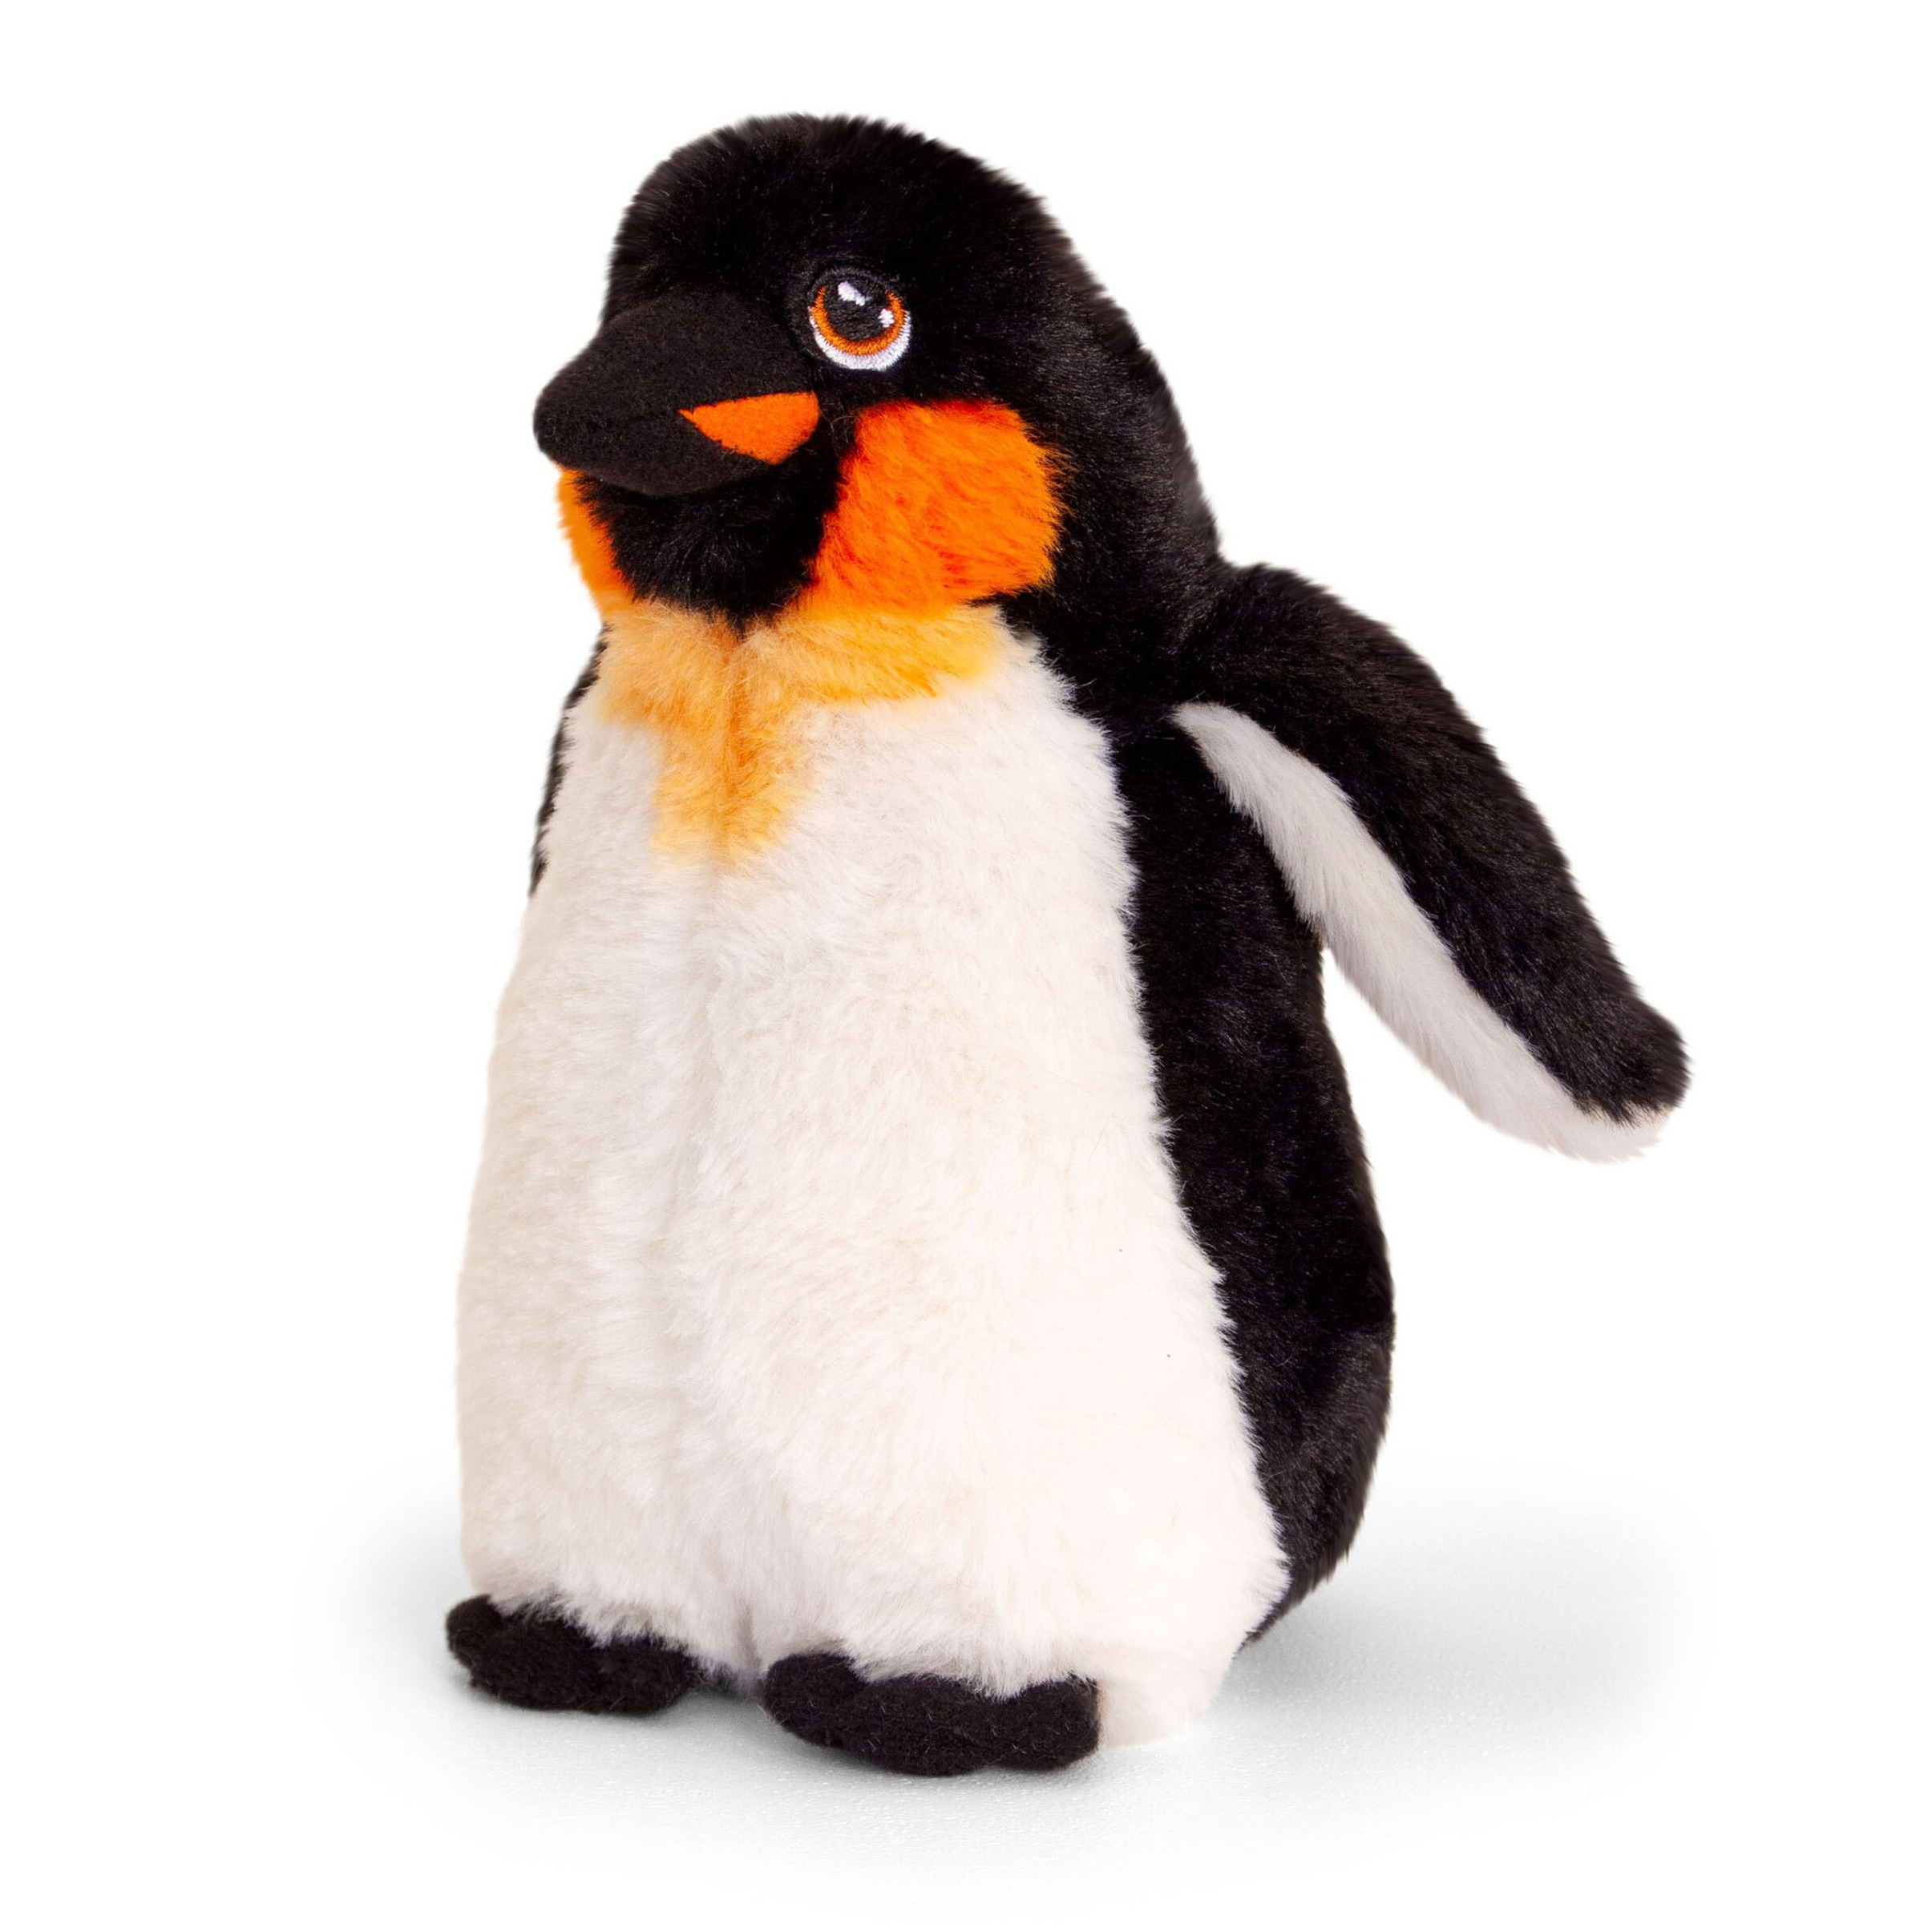 Keel Toys pluche keizers pinguin knuffeldier wit-zwart staand 20 cm